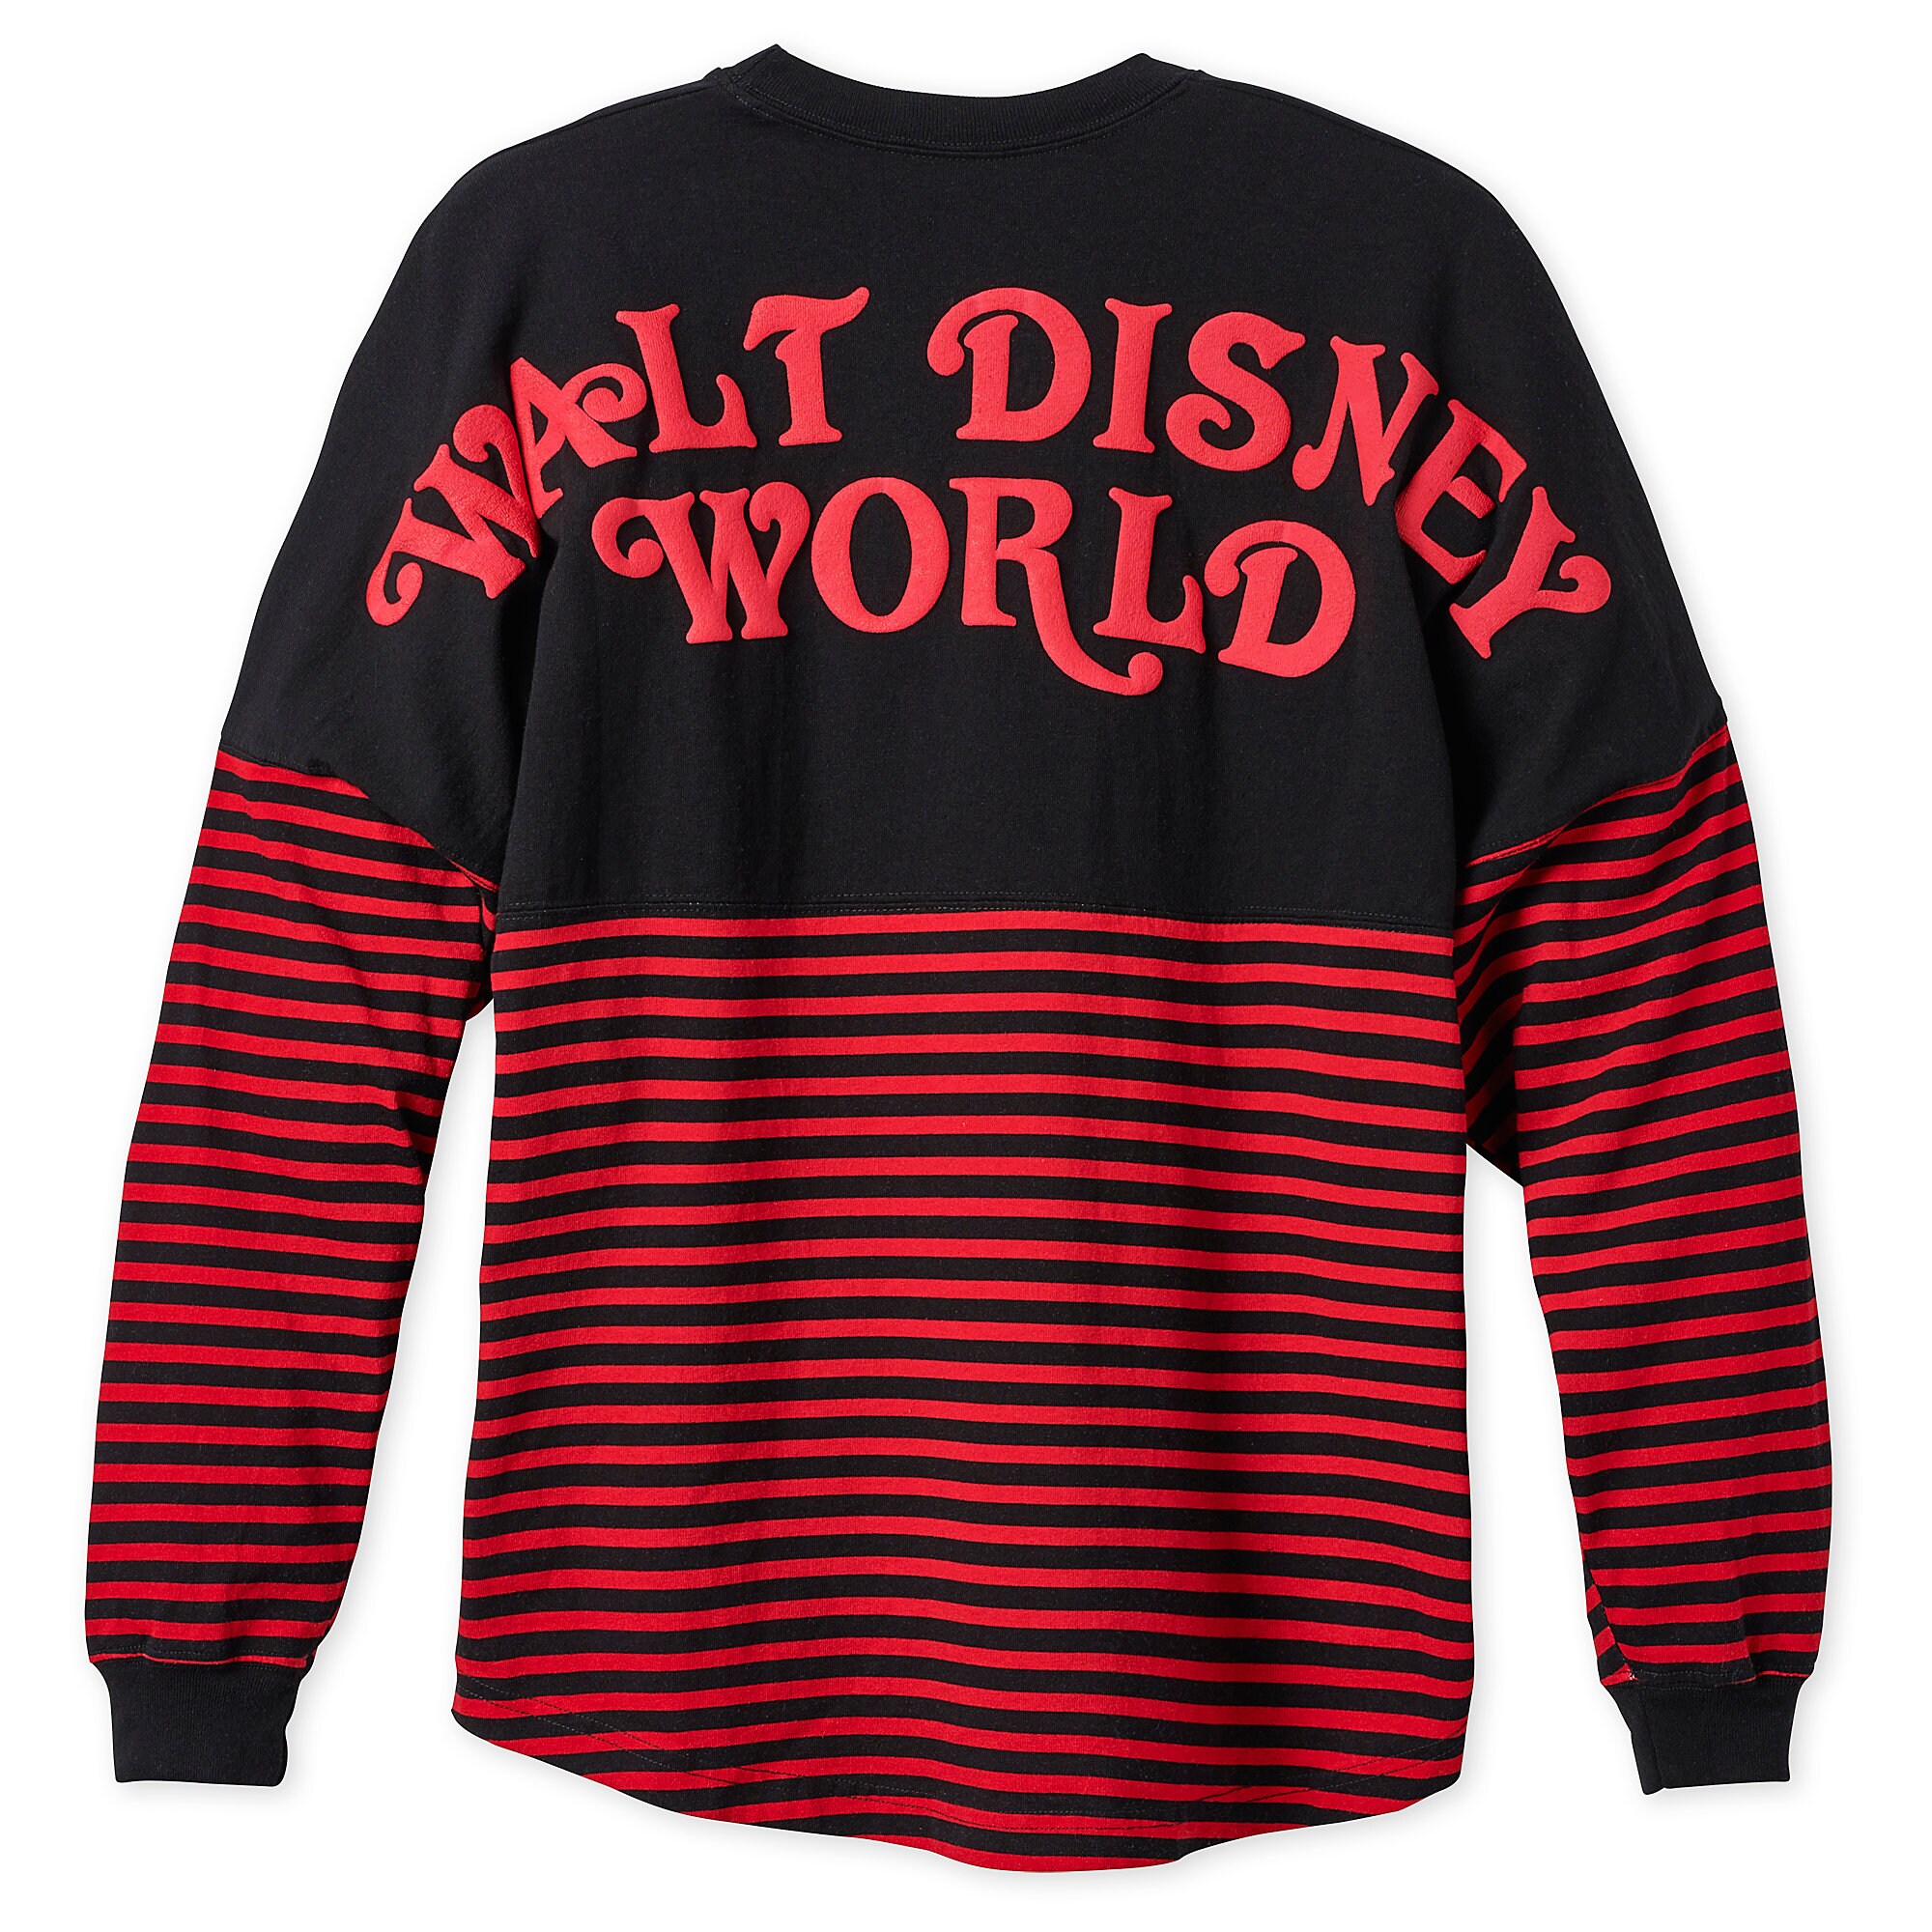 Pirates of the Caribbean Spirit Jersey for Adults - Walt Disney World